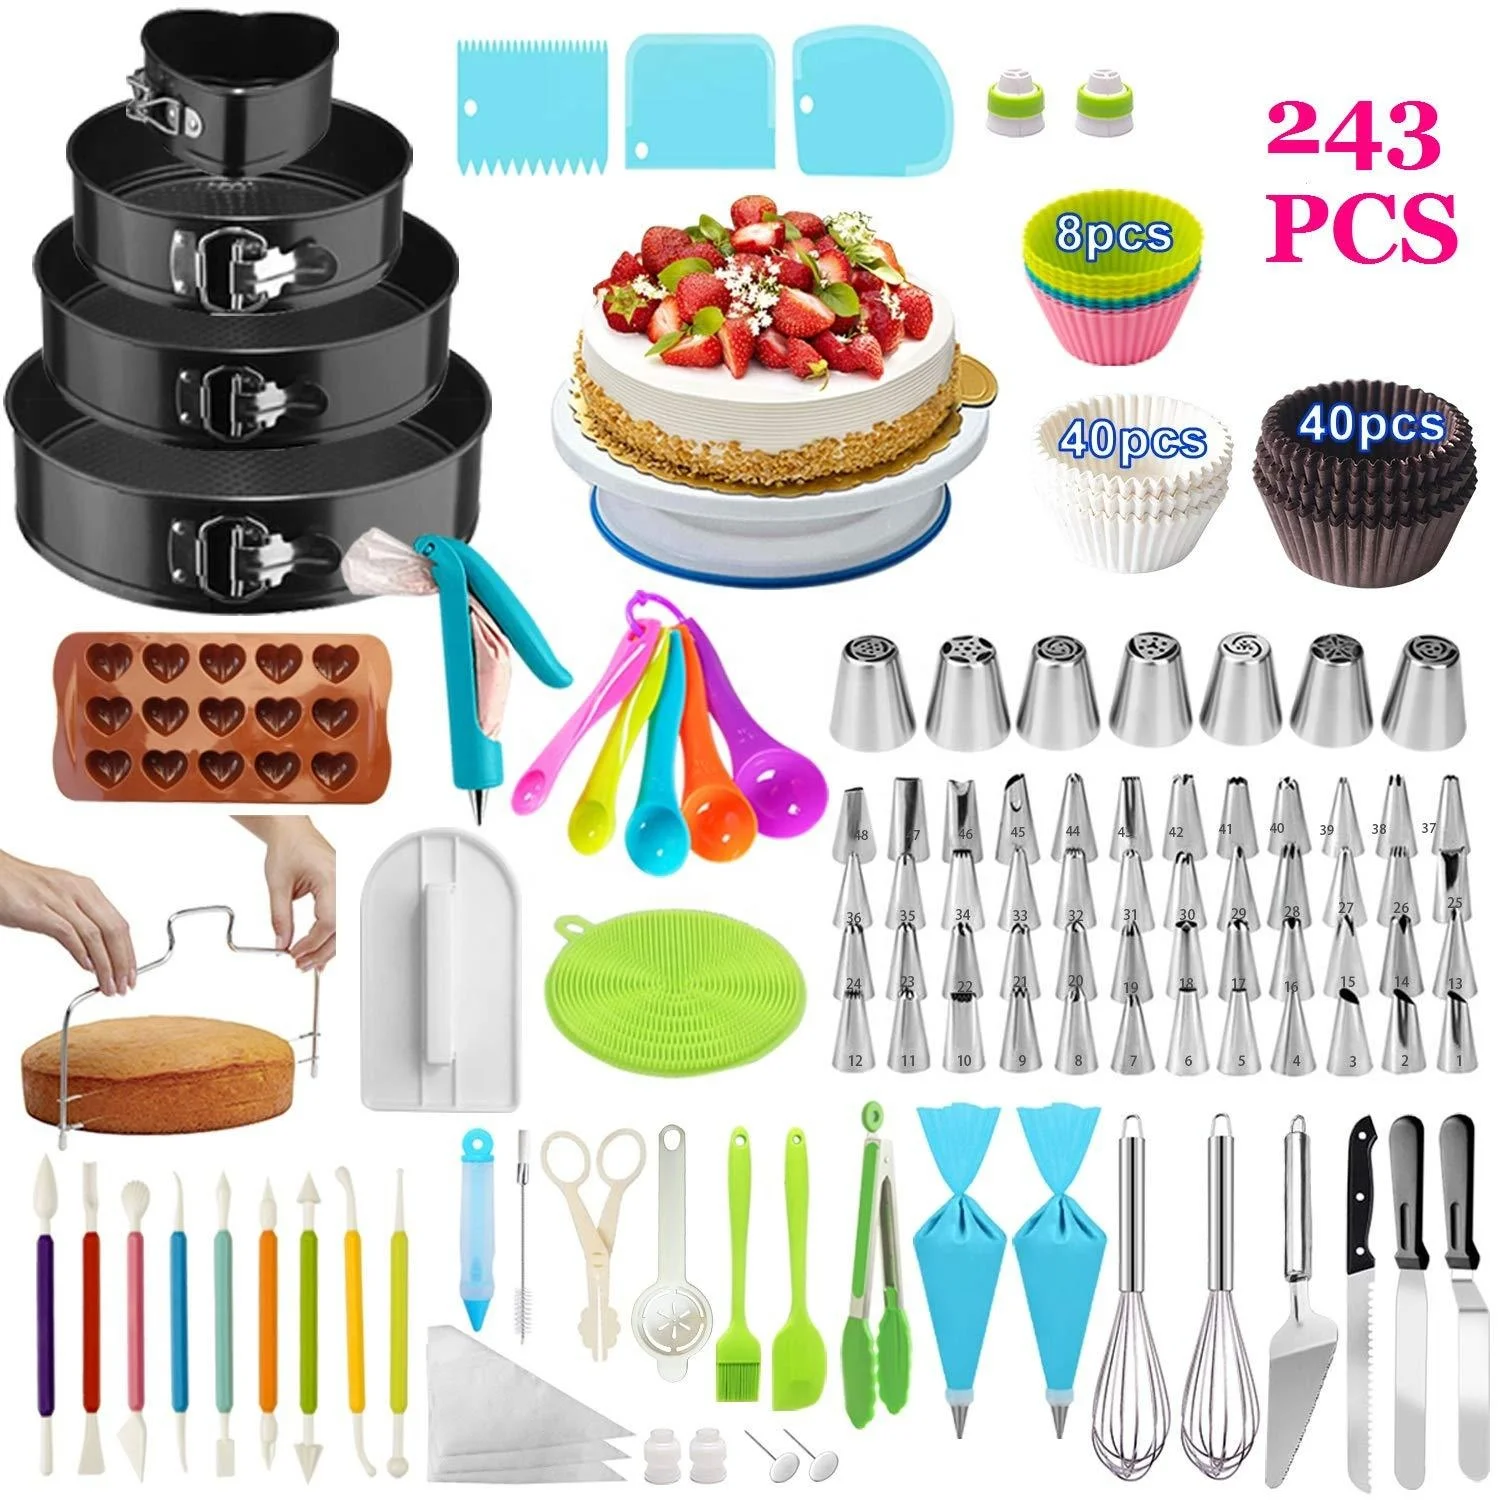 

243pcs Amazon cupcake baking fondant tools cake decorating nozzles turntable stand tip molds set items tools supplies kit